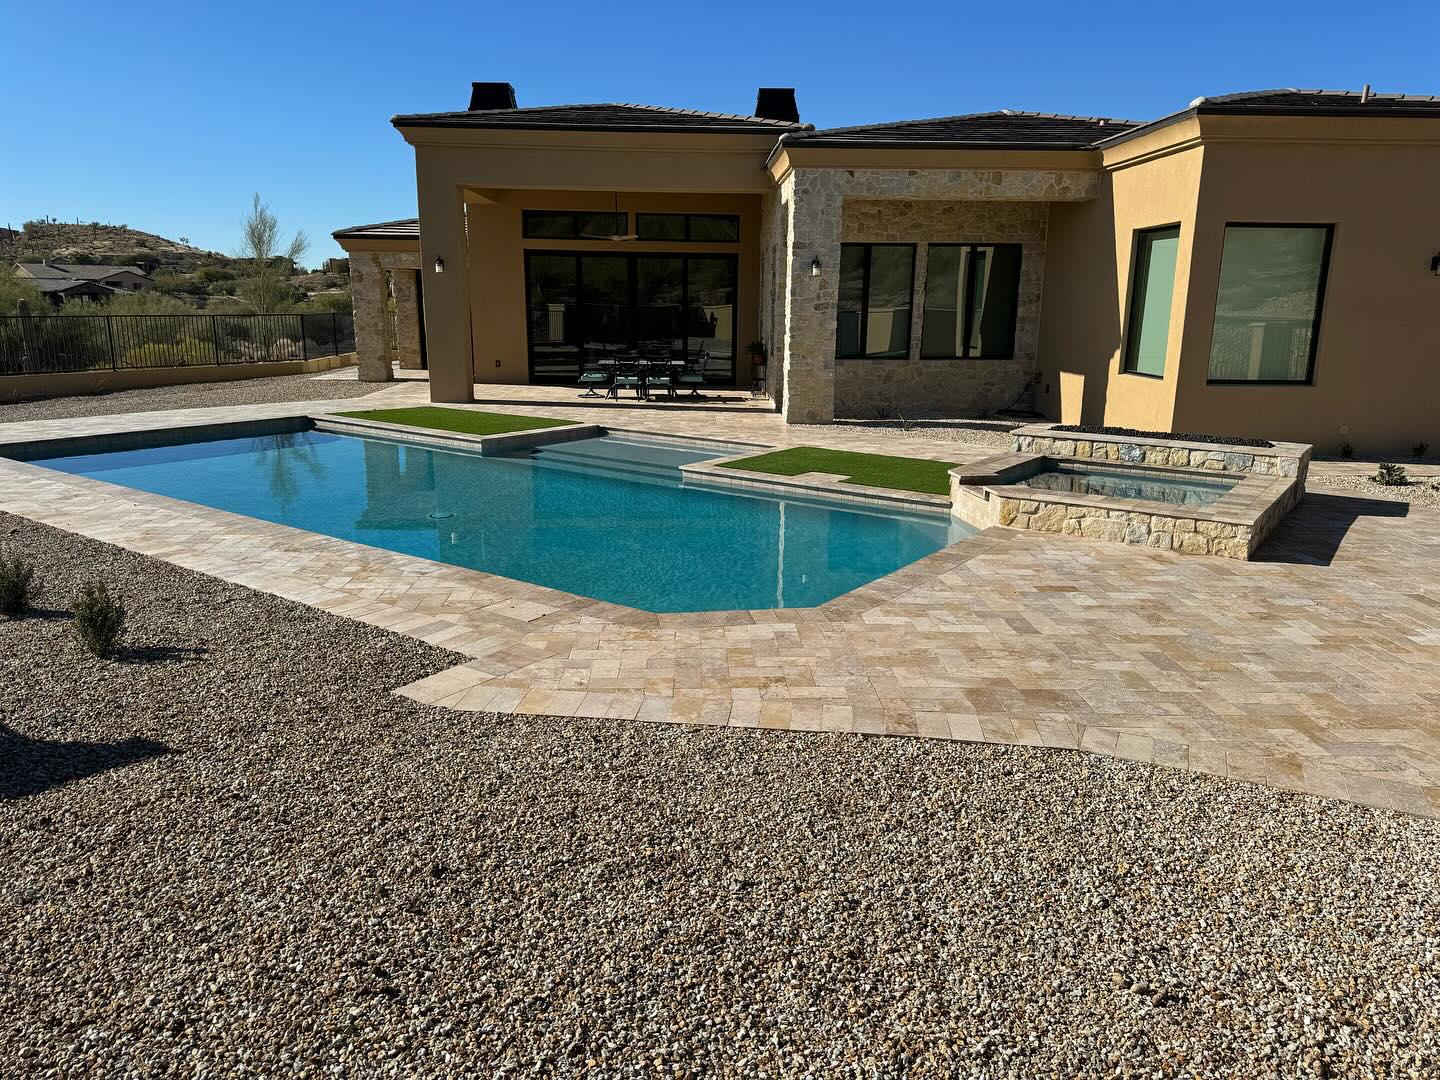 San Tan Valley, AZ Pool Builder, Top-Rated Pool Contractor No Limit Pools & Spas Mesa (602)421-9379